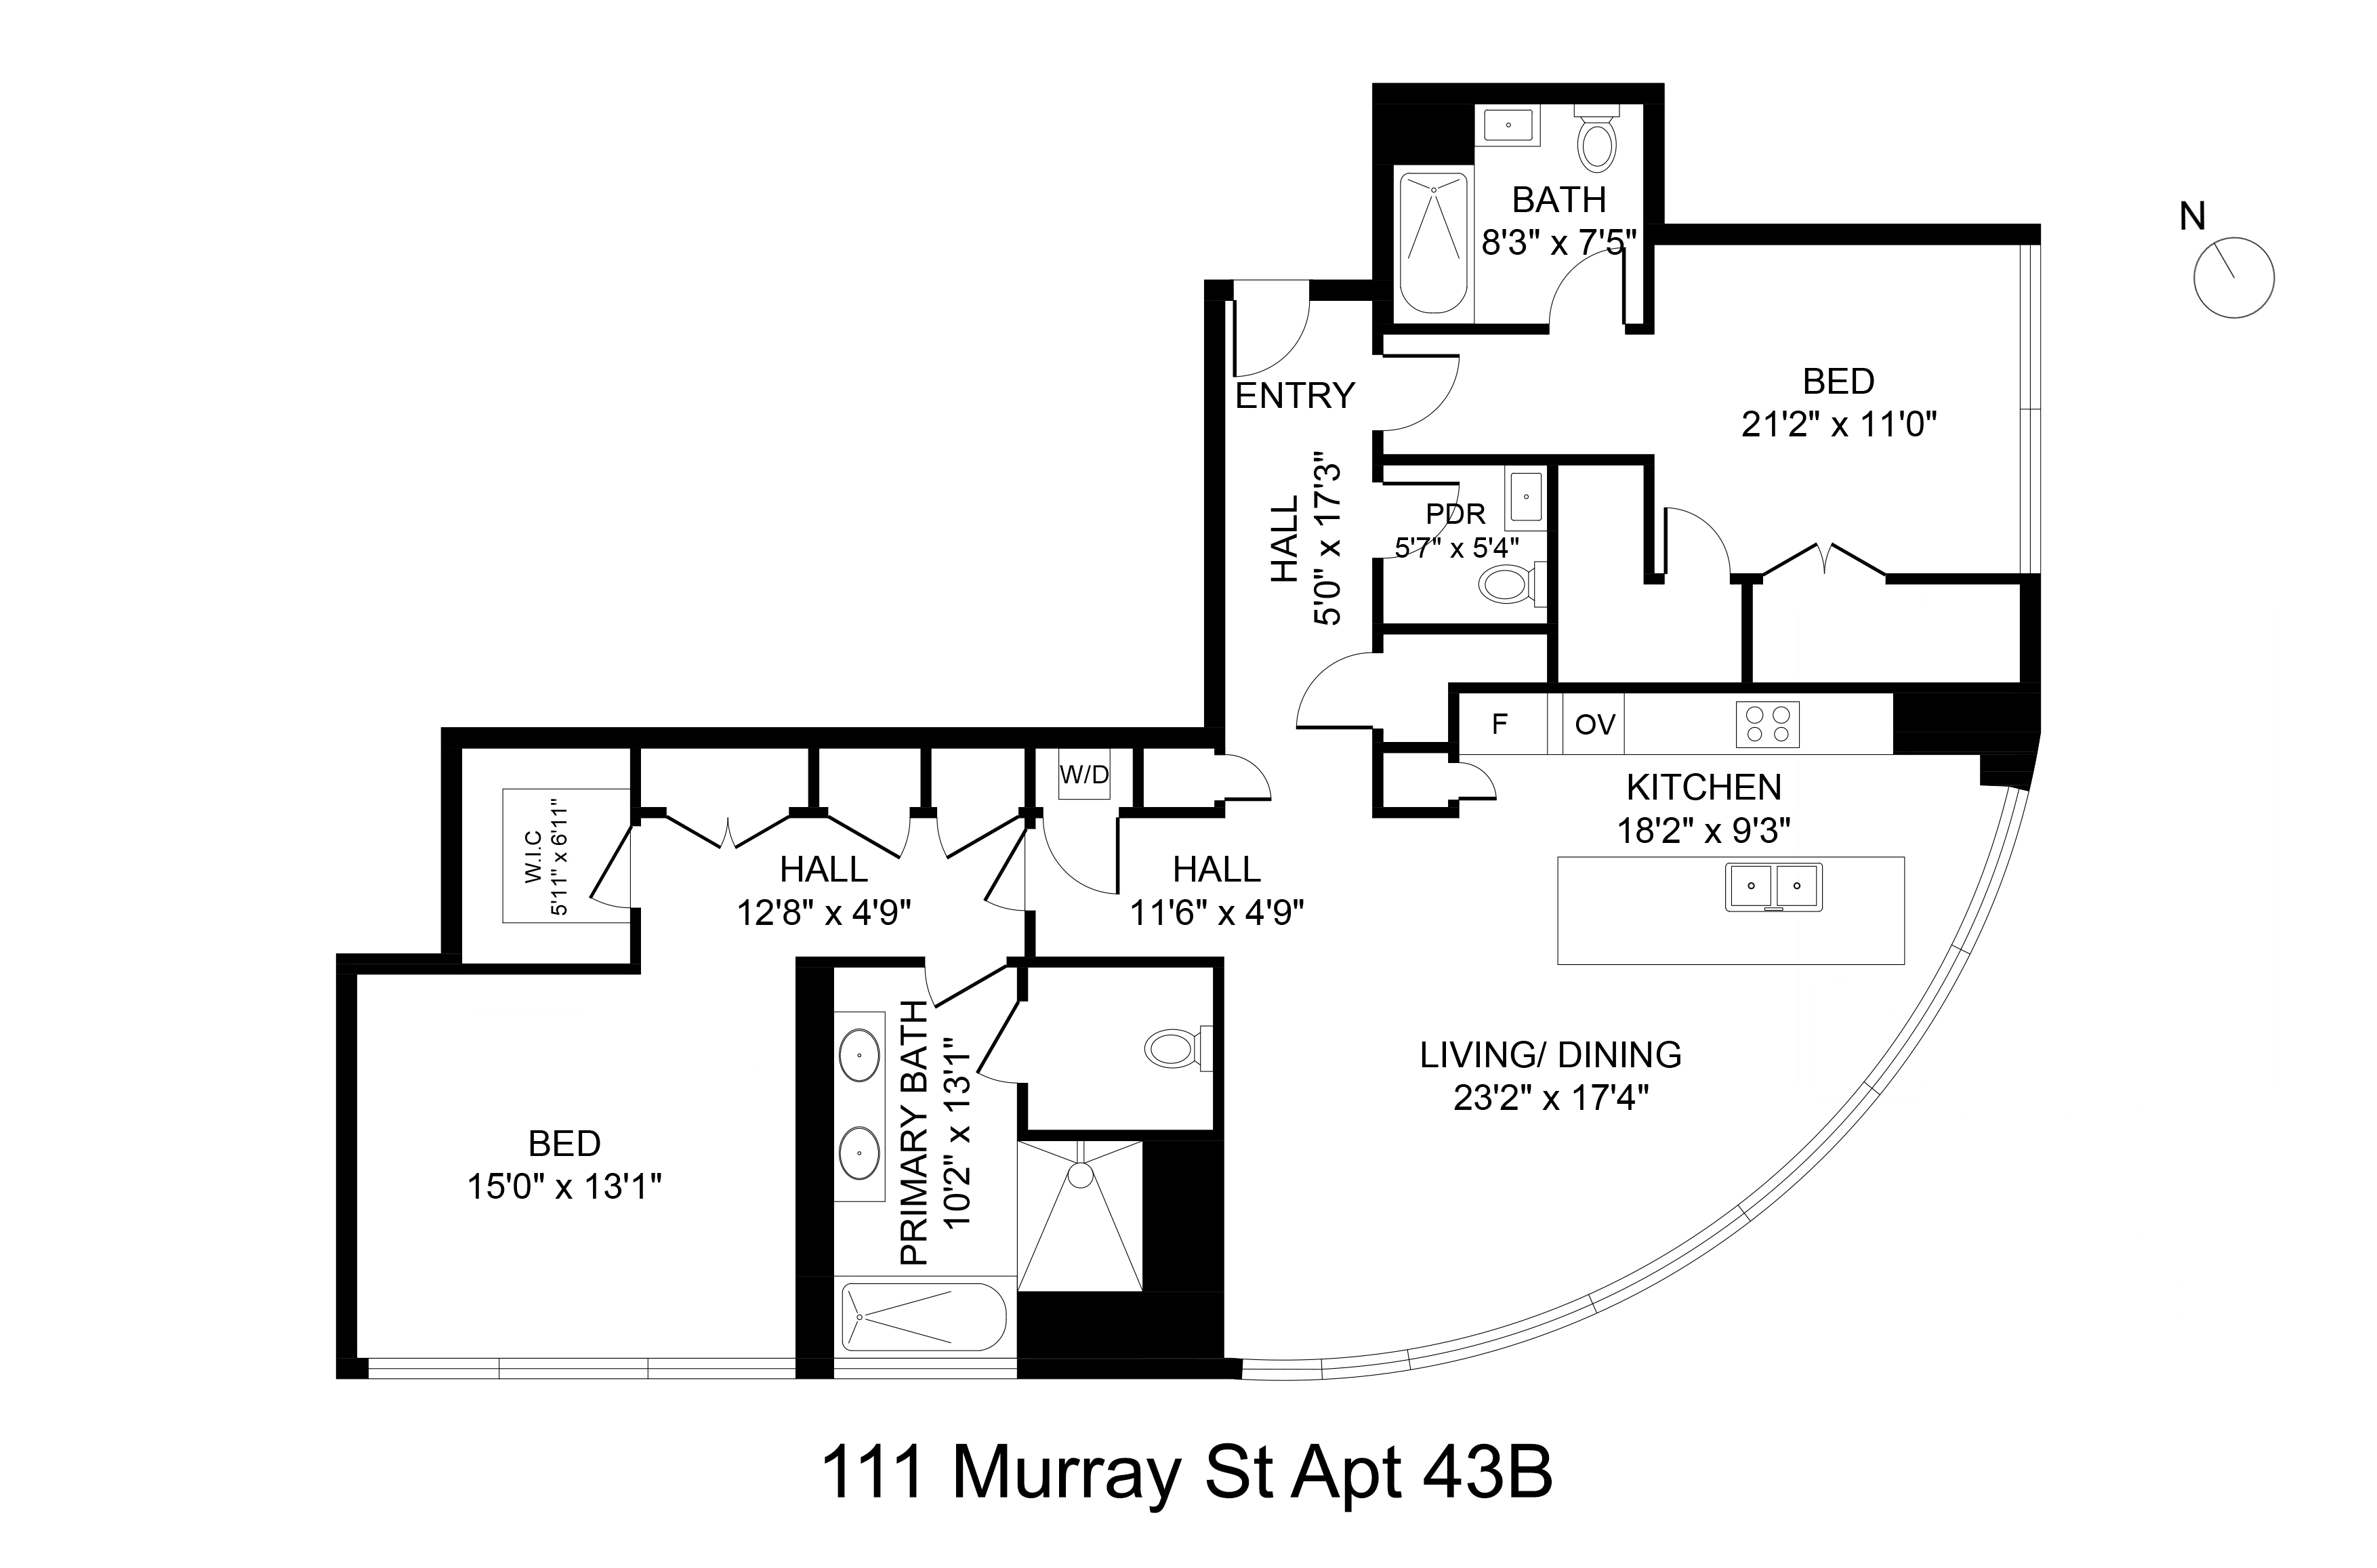 Floorplan for 111 Murray Street, 43B